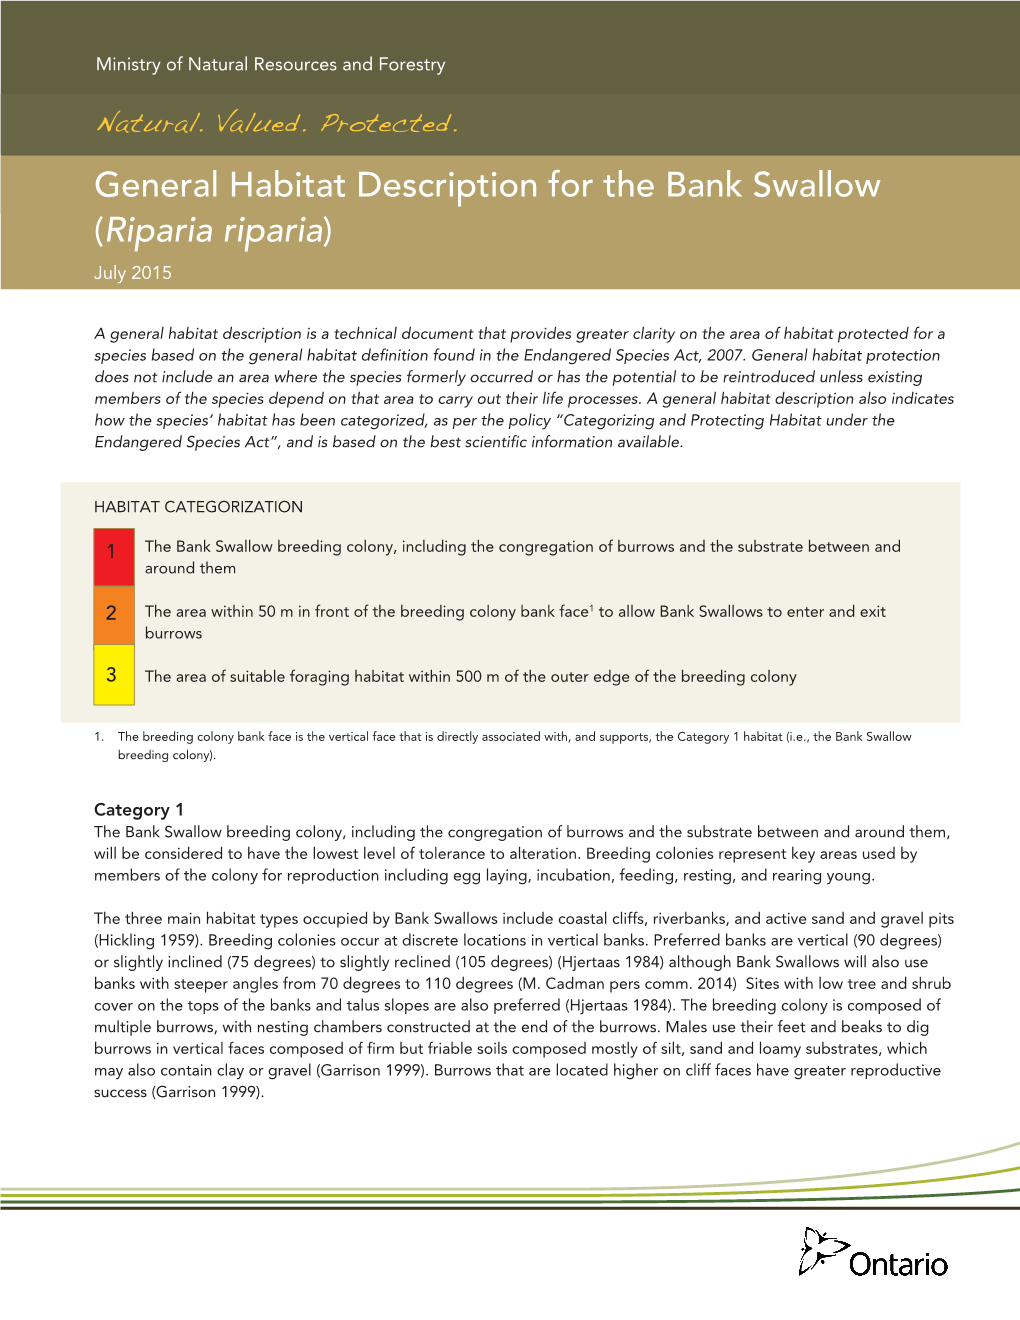 General Habitat Description for the Bank Swallow (Riparia Riparia) July 2015